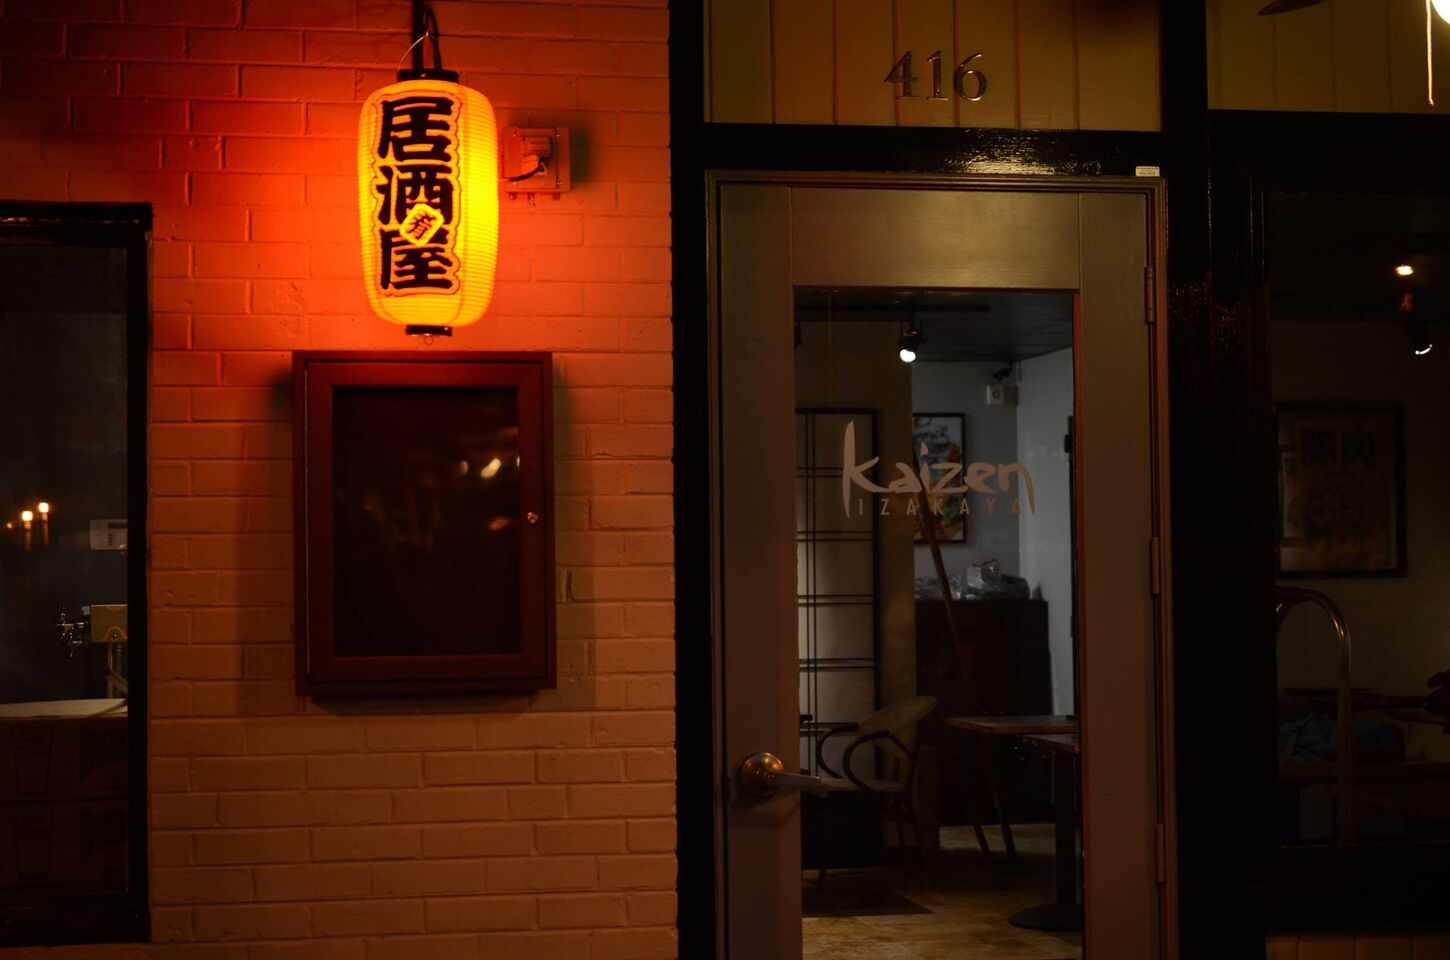 A photo of Kaizen